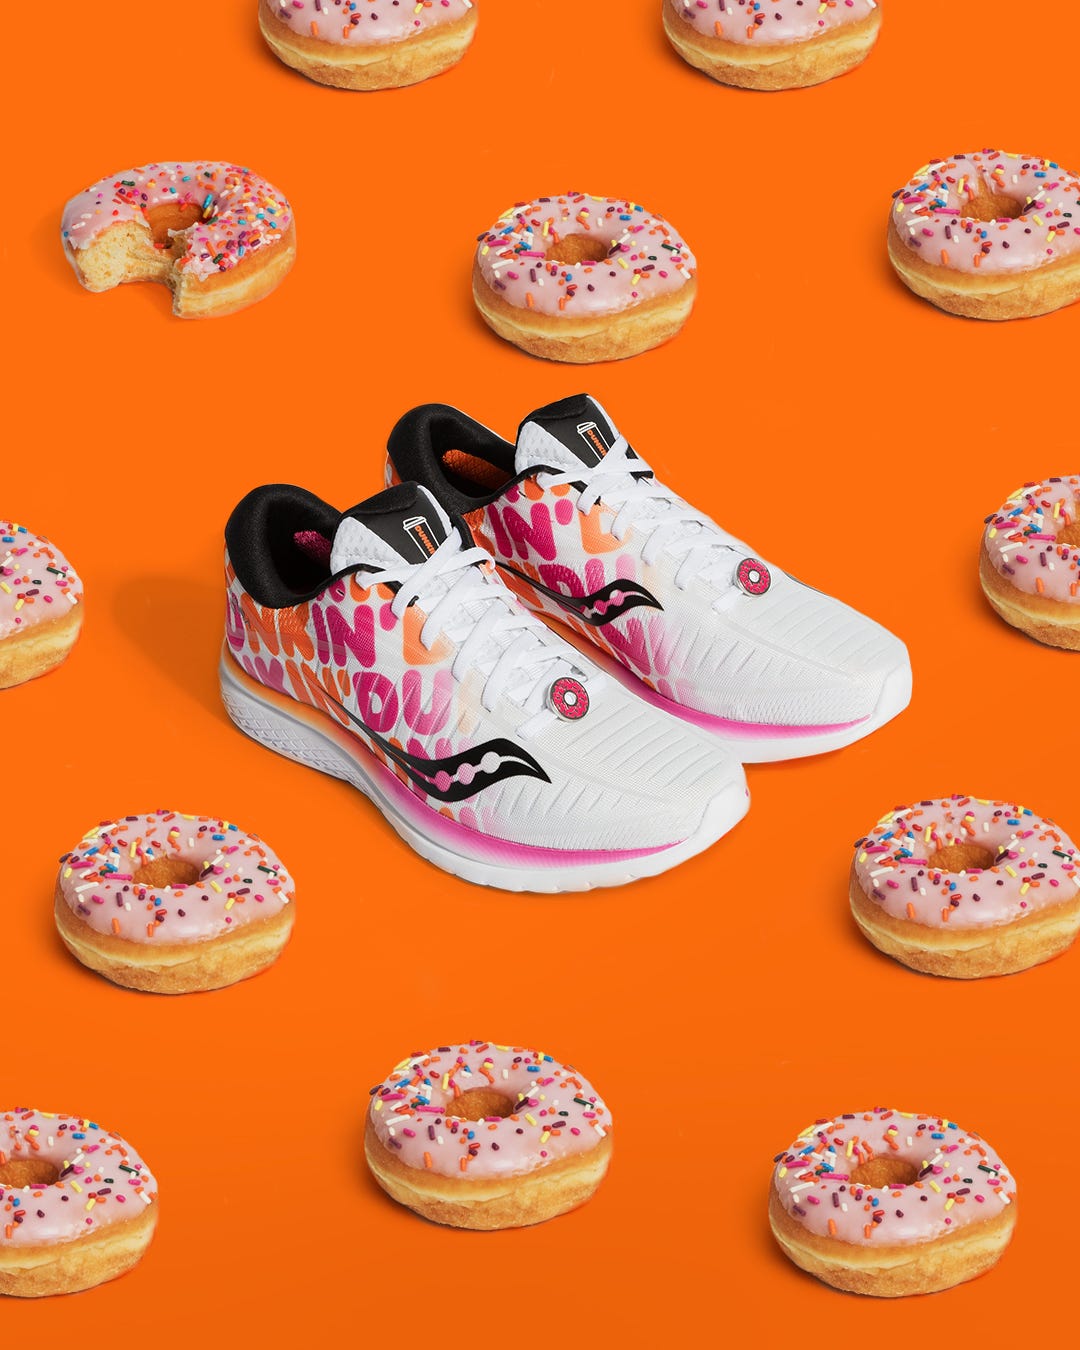 Saucony debut new doughnut-inspired sneaker